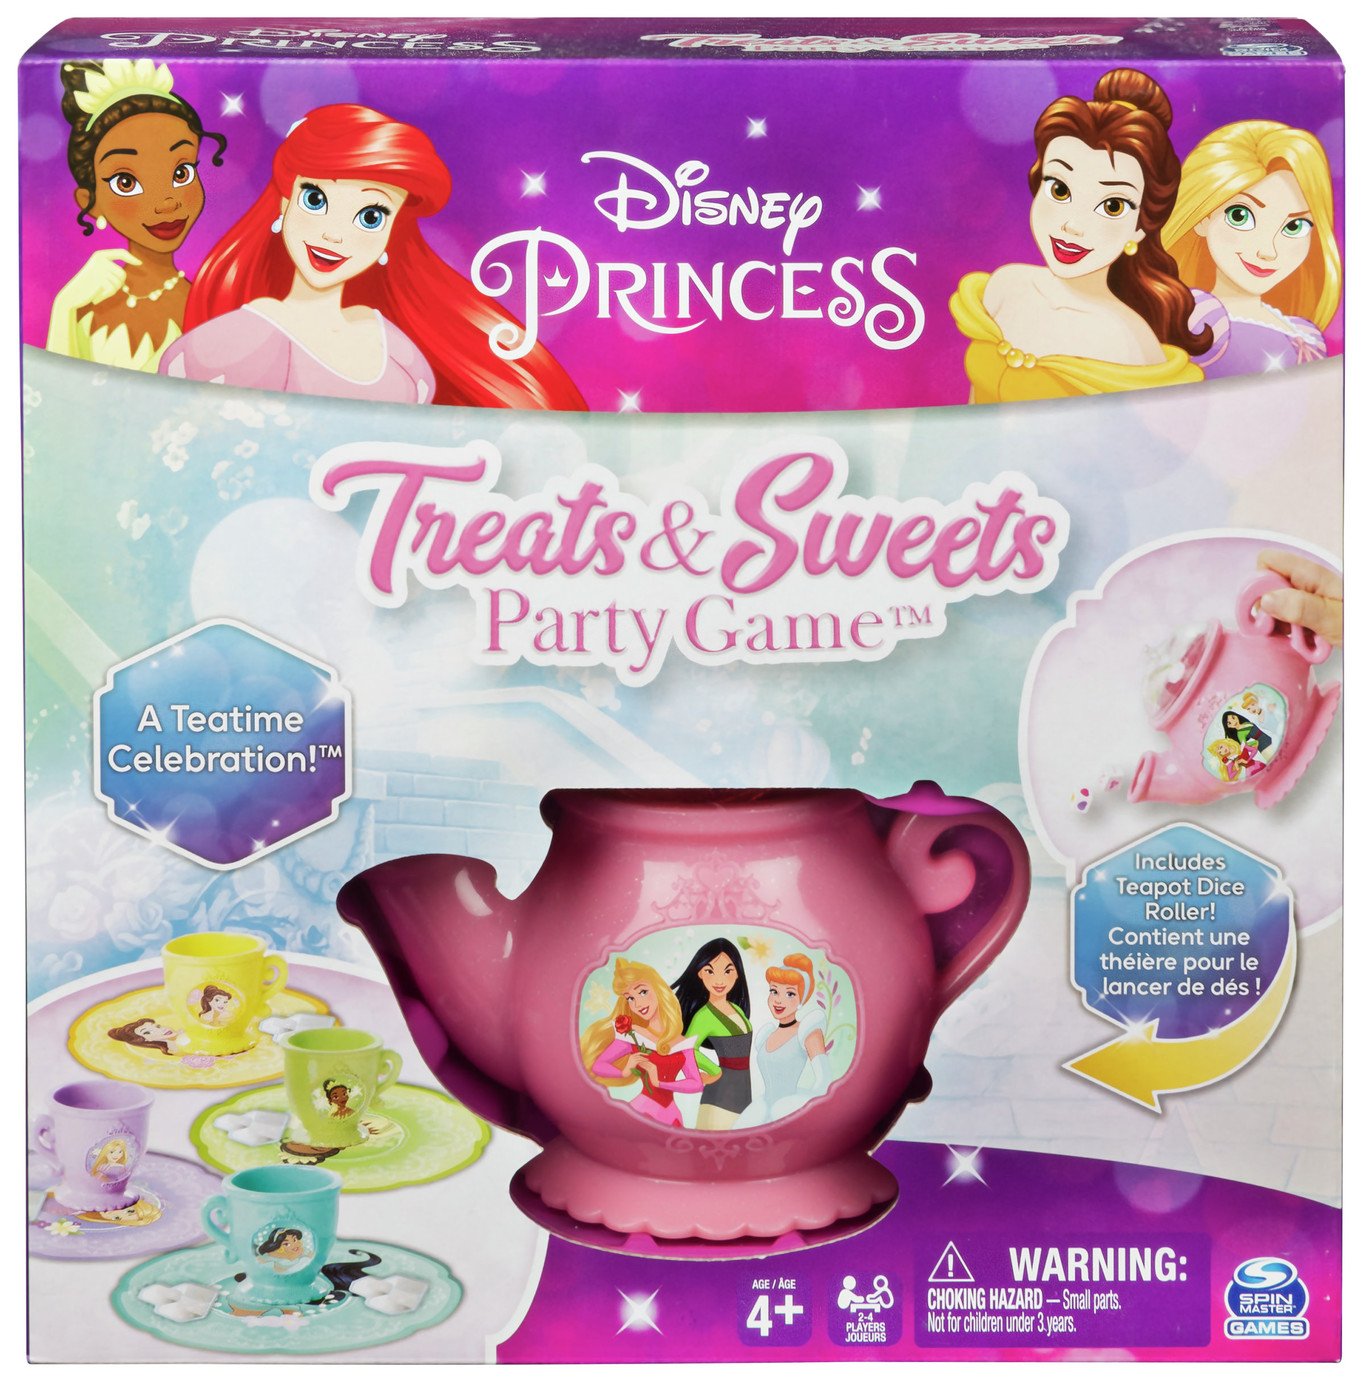 Disney Princess Tea Party Board Game review